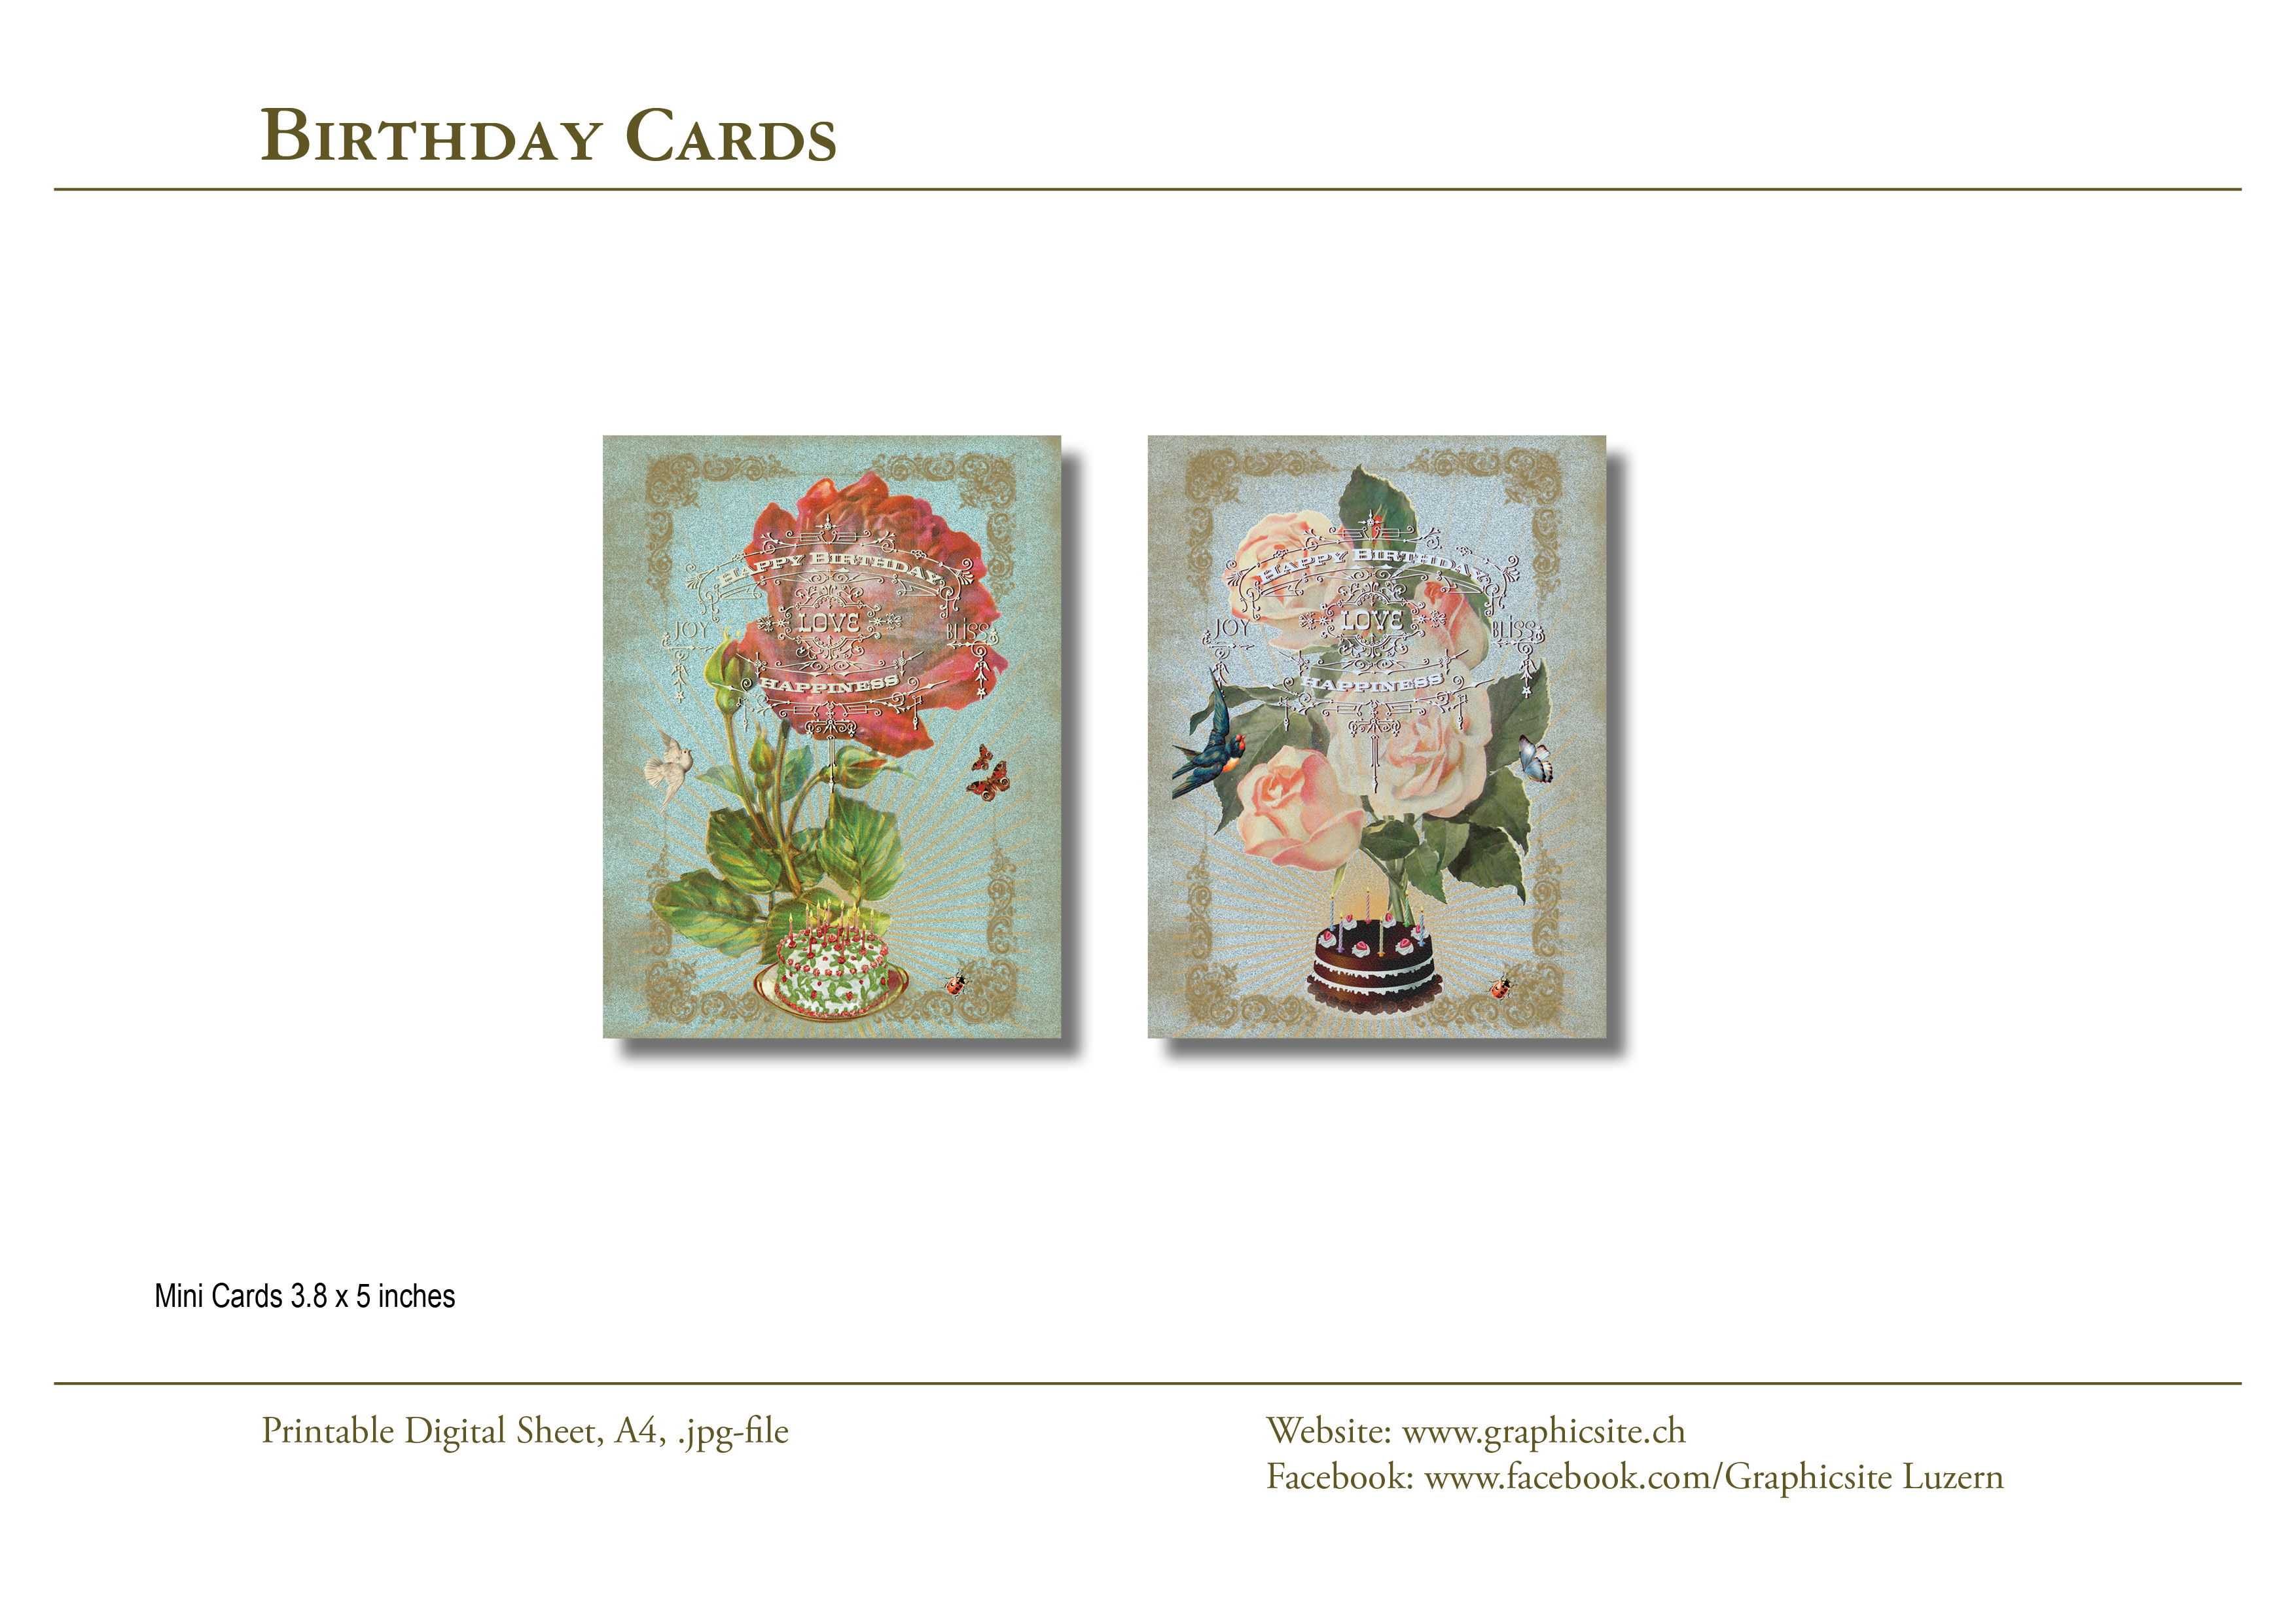 Printable Digital Sheets - 3.8 Mini Cards - Birthday 1 & 2